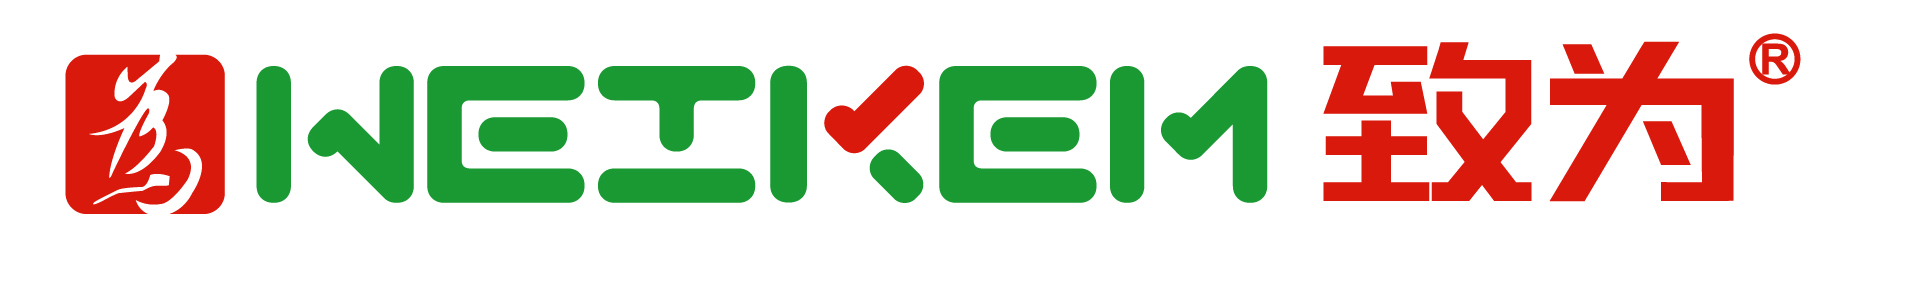 Weikem Chemical Co., Ltd. _logo